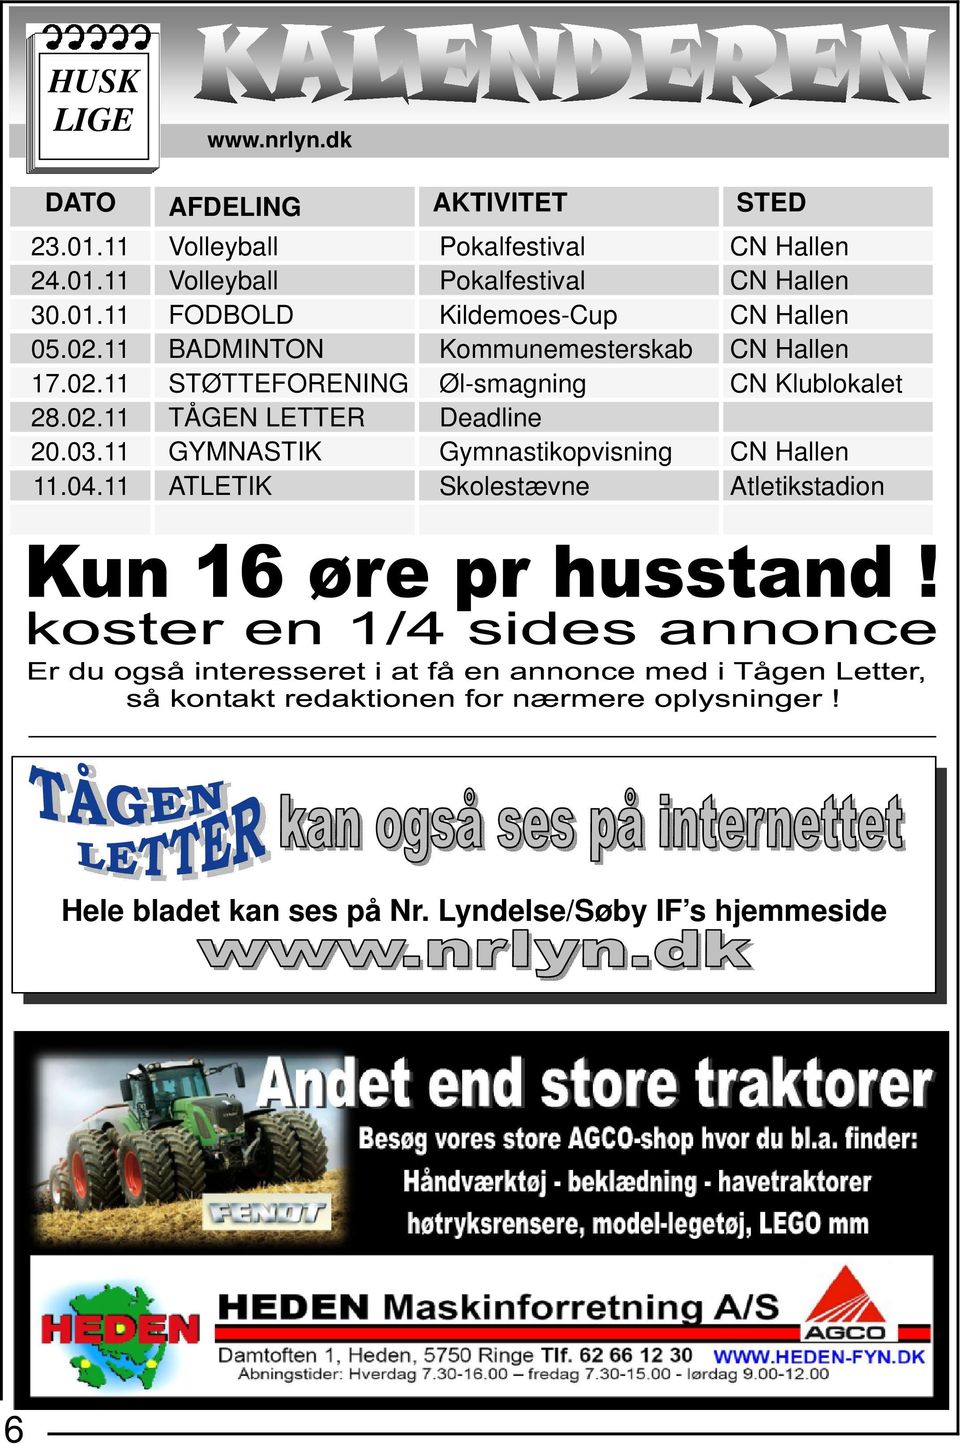 02.11 TÅGEN LETTER Deadline 20.03.11 GYMNASTIK Gymnastikopvisning CN Hallen 11.04.